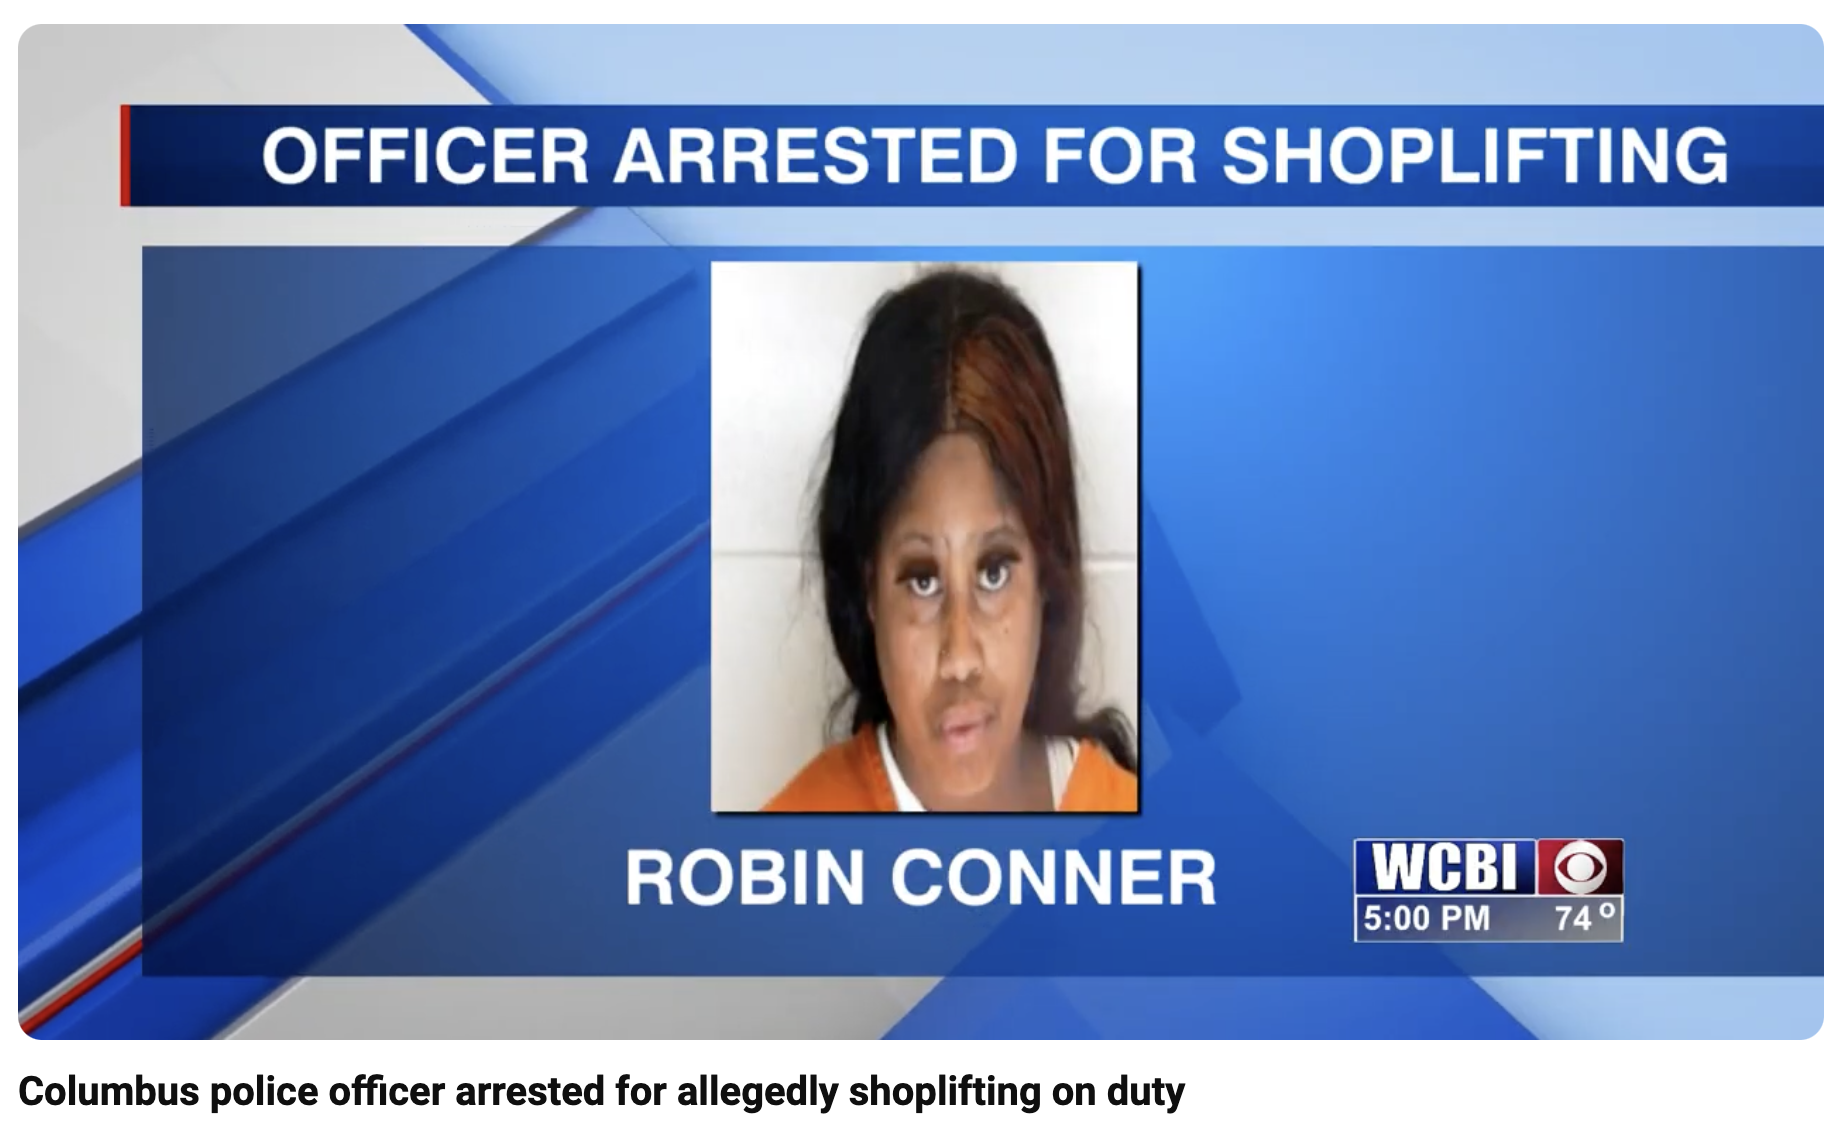 presentation - Officer Arrested For Shoplifting Robin Conner Columbus police officer arrested for allegedly shoplifting on duty Wcbio 74